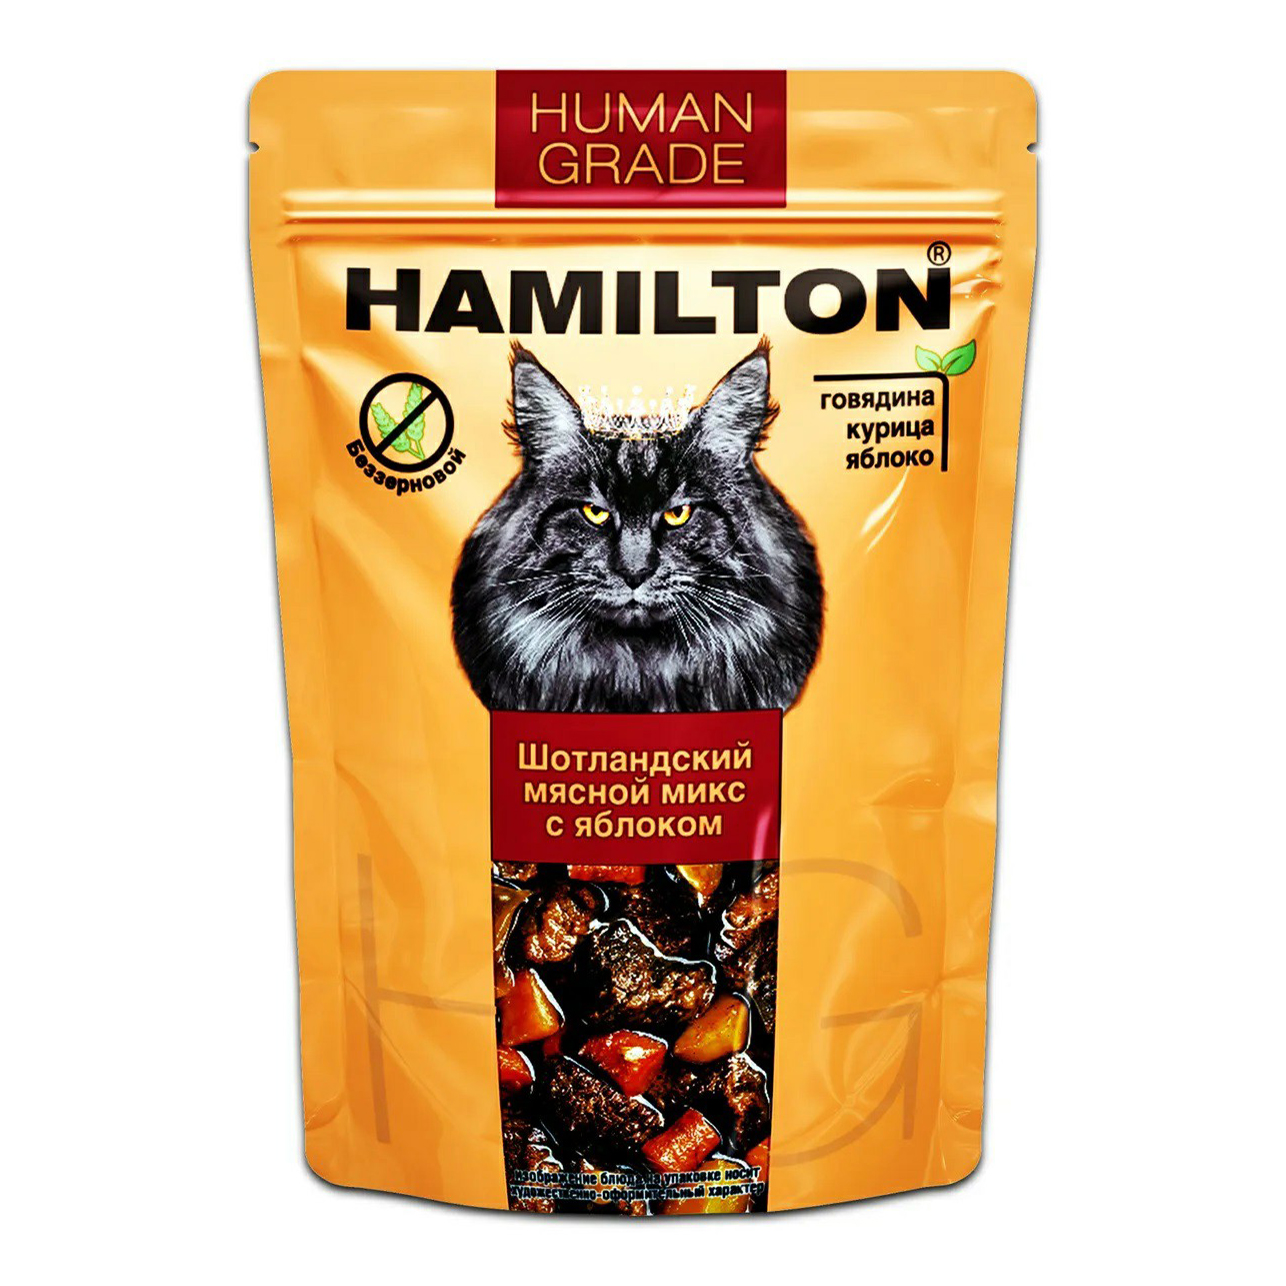 Влажный корм для кошек Hamilton Human Grade,говядина, курица, 85г